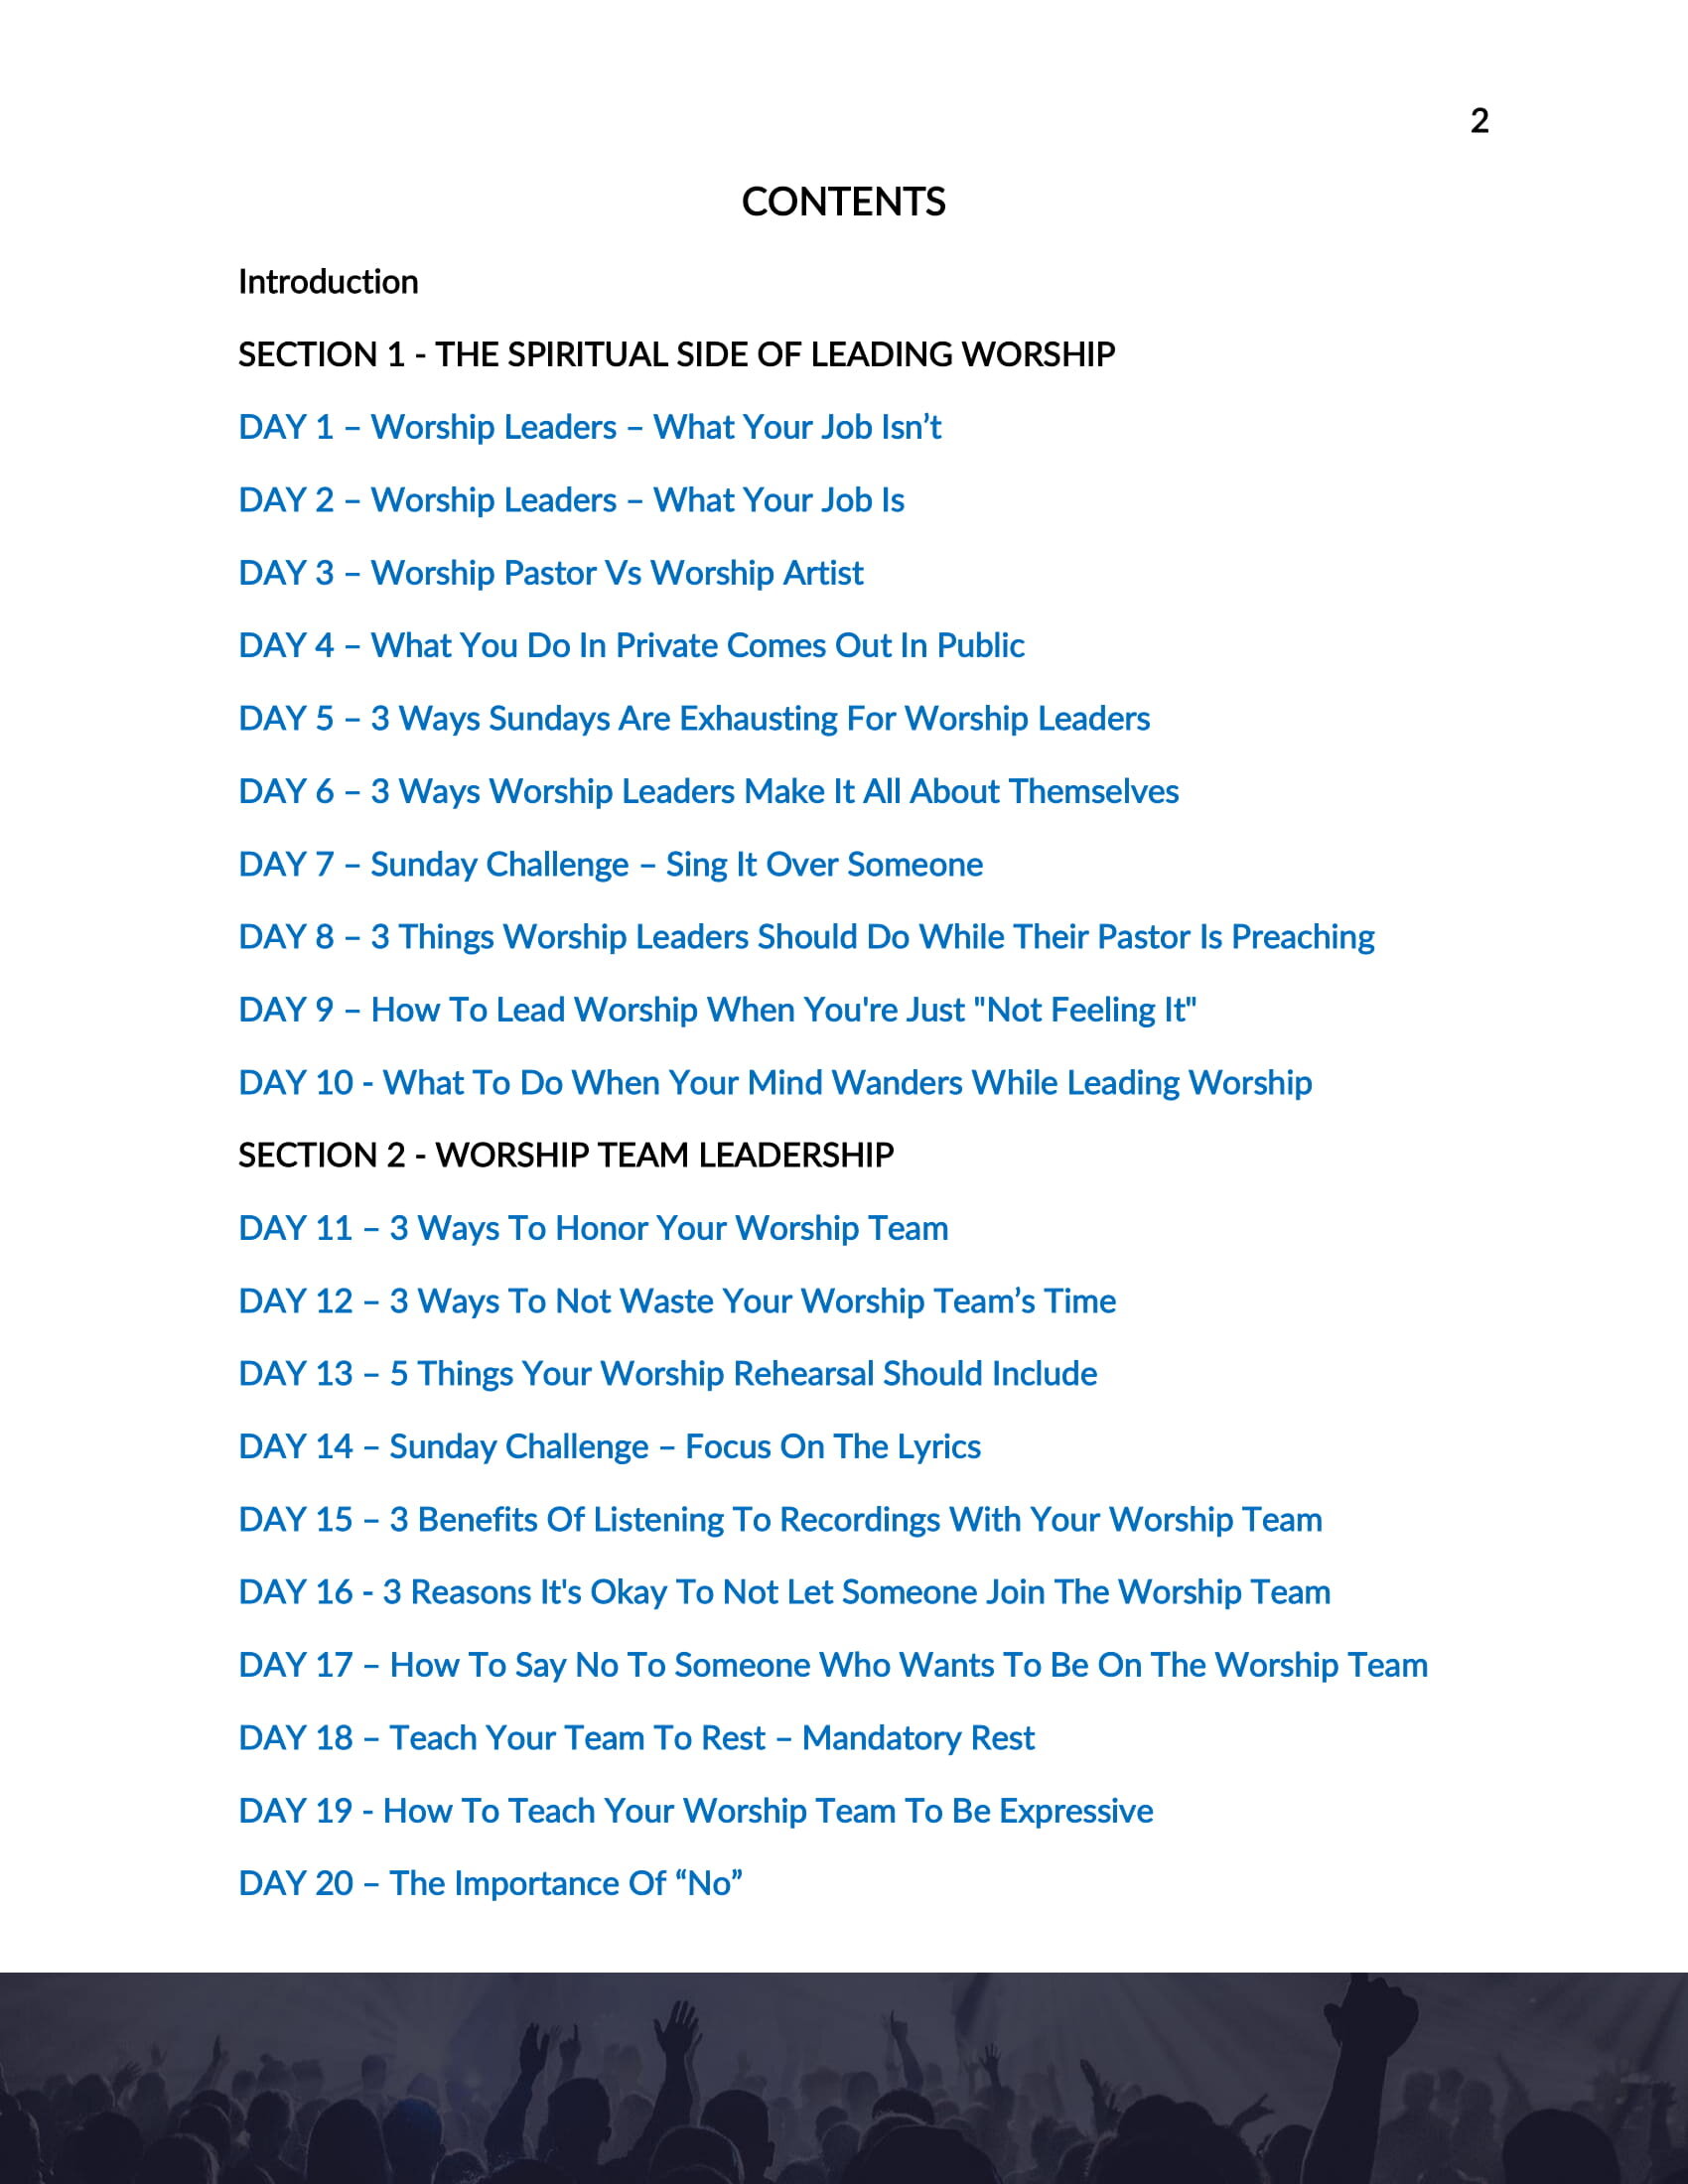 30 Days to Leading Worship Well - Devotional-02.jpg